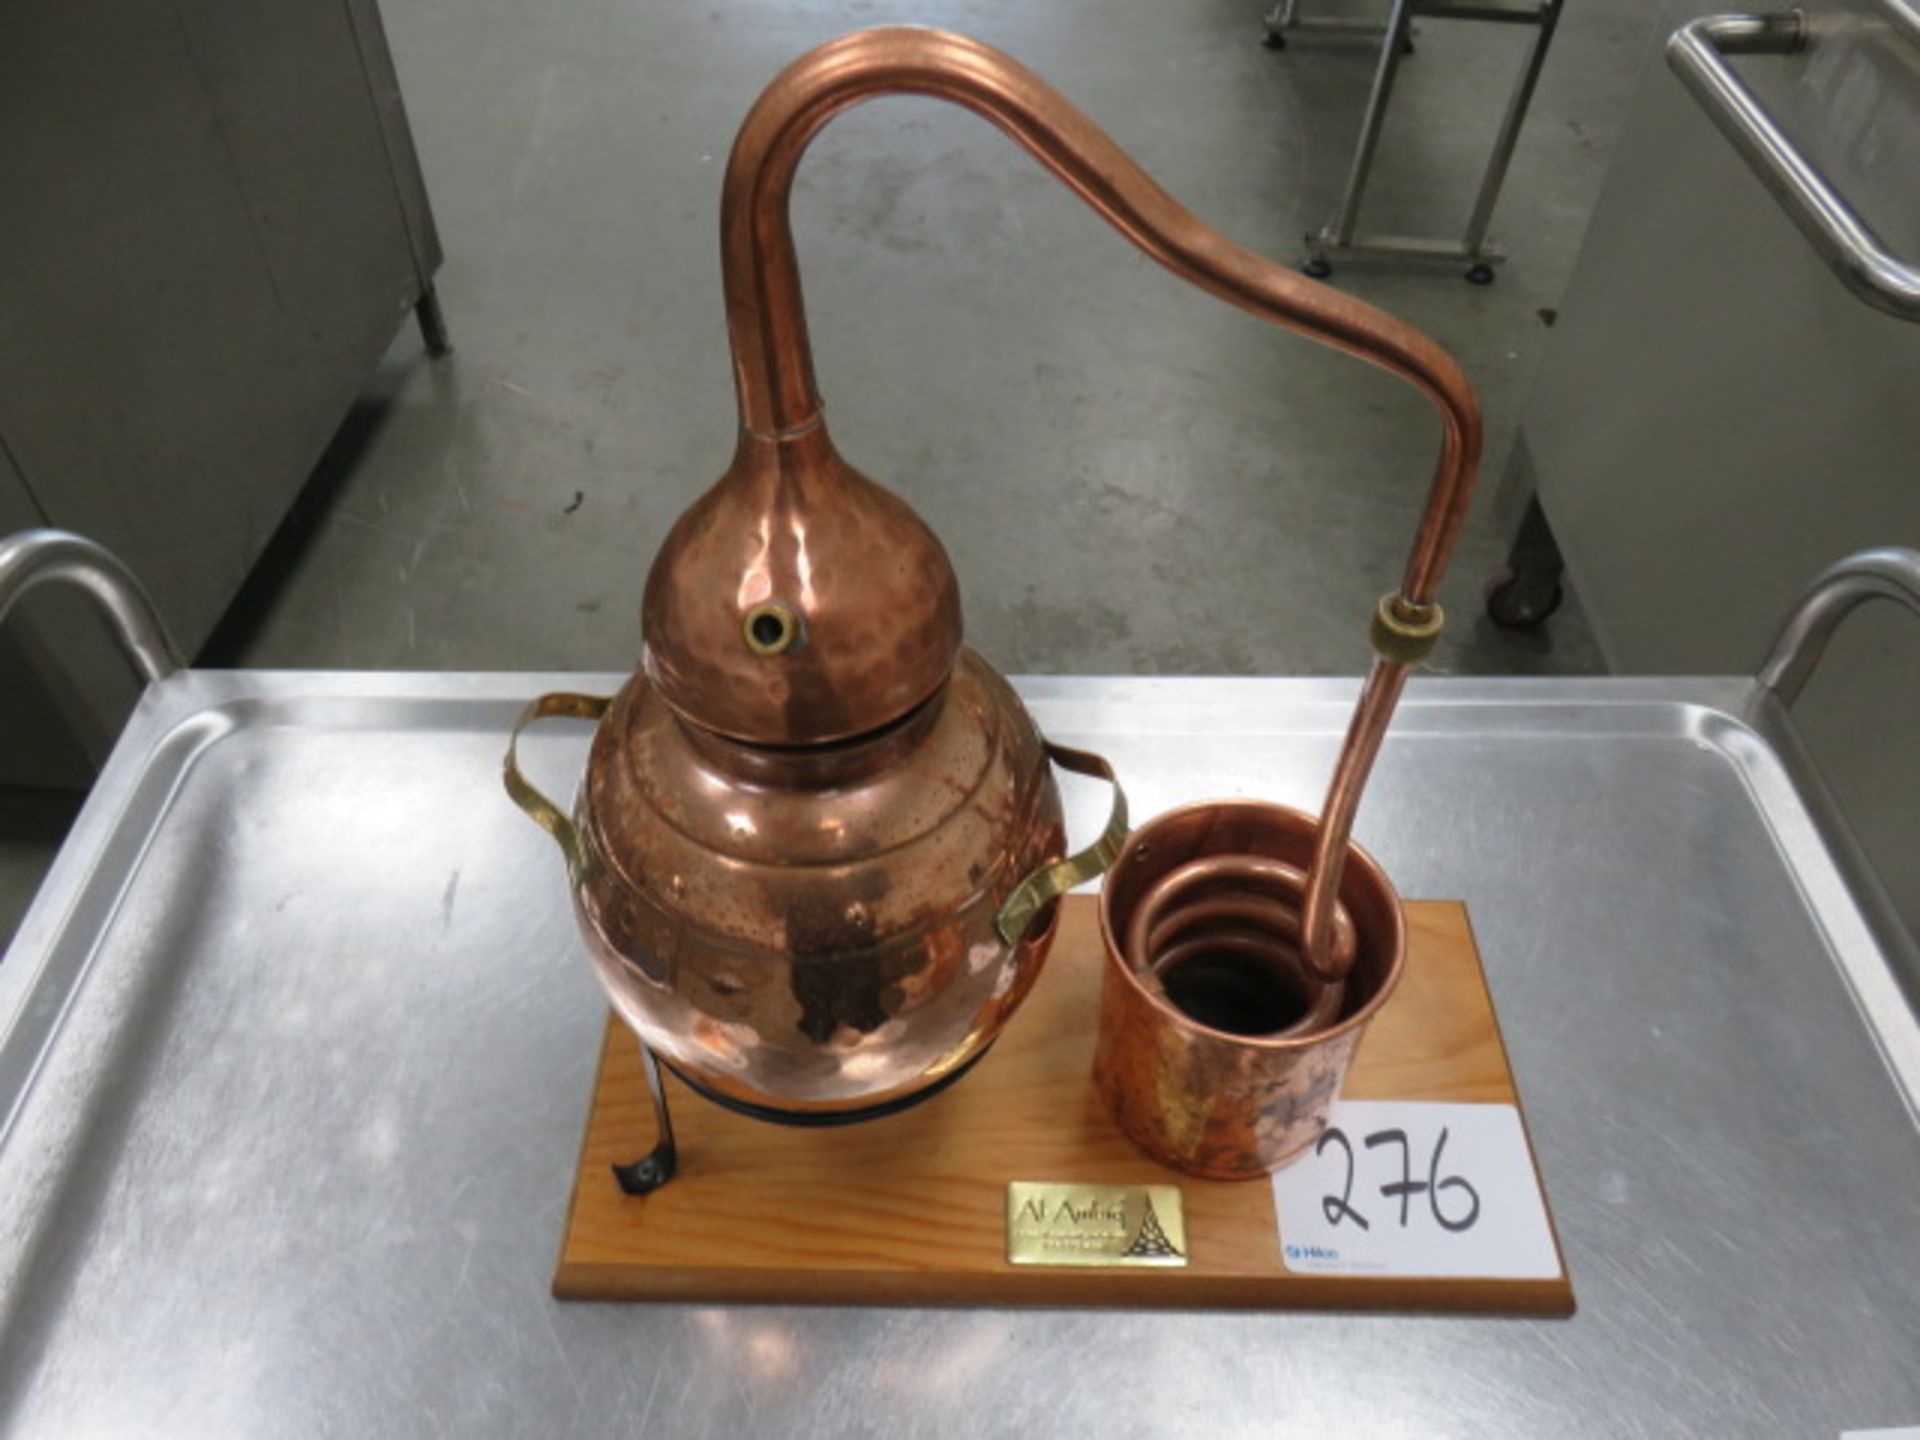 1, Al- Ambiq Decorative Miniature Copper Test Still on Display Stand